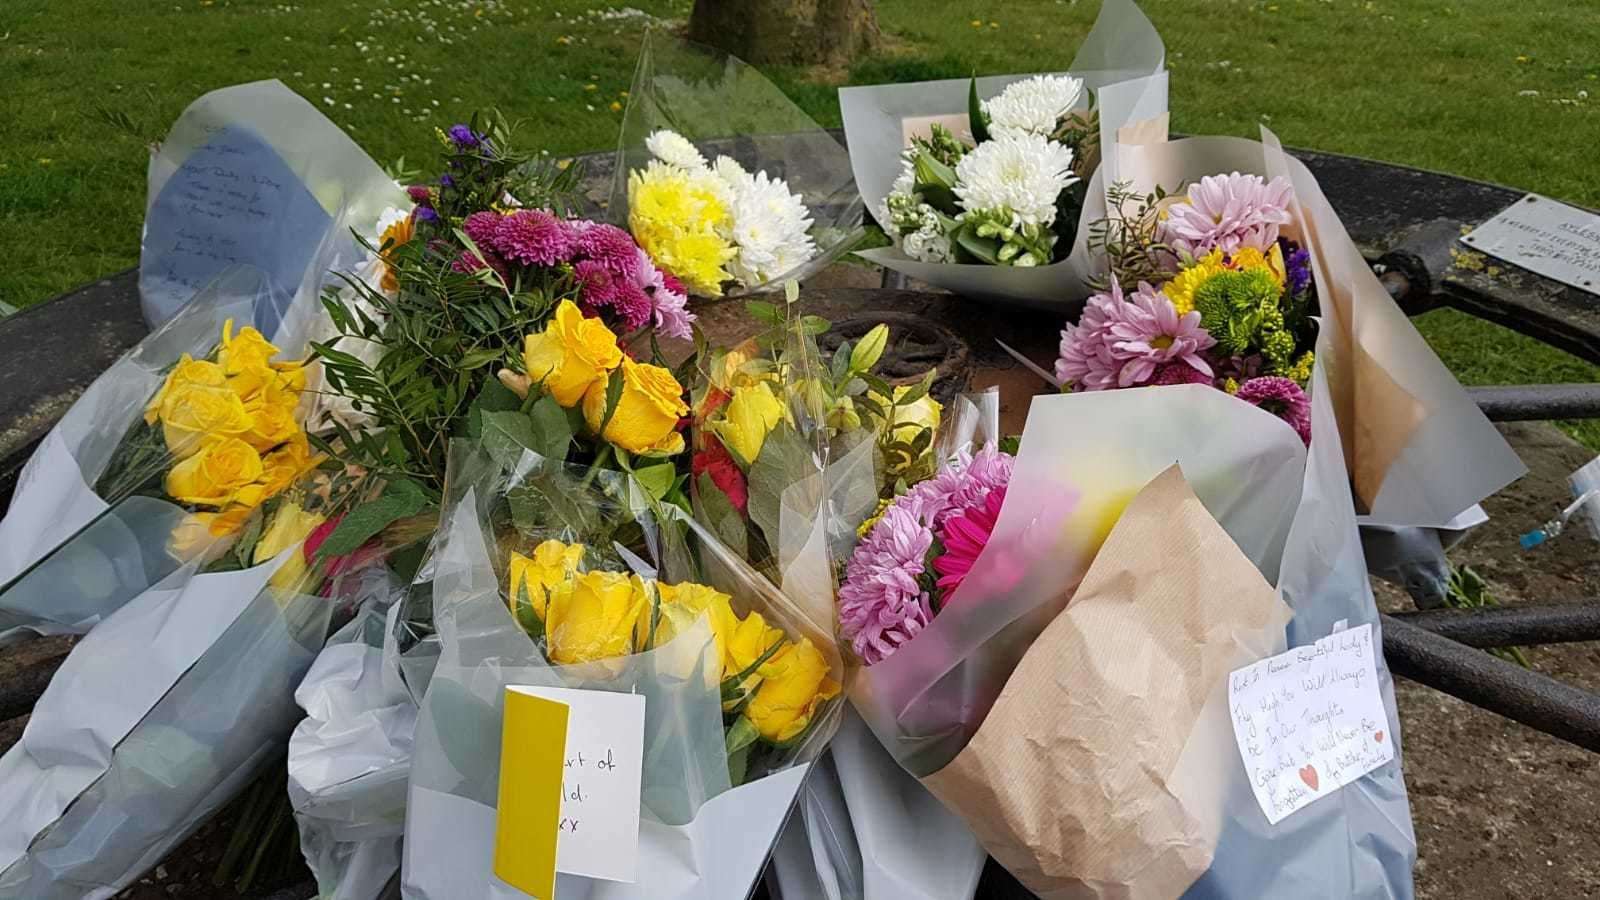 Floral tributes left for PCSO Julia James